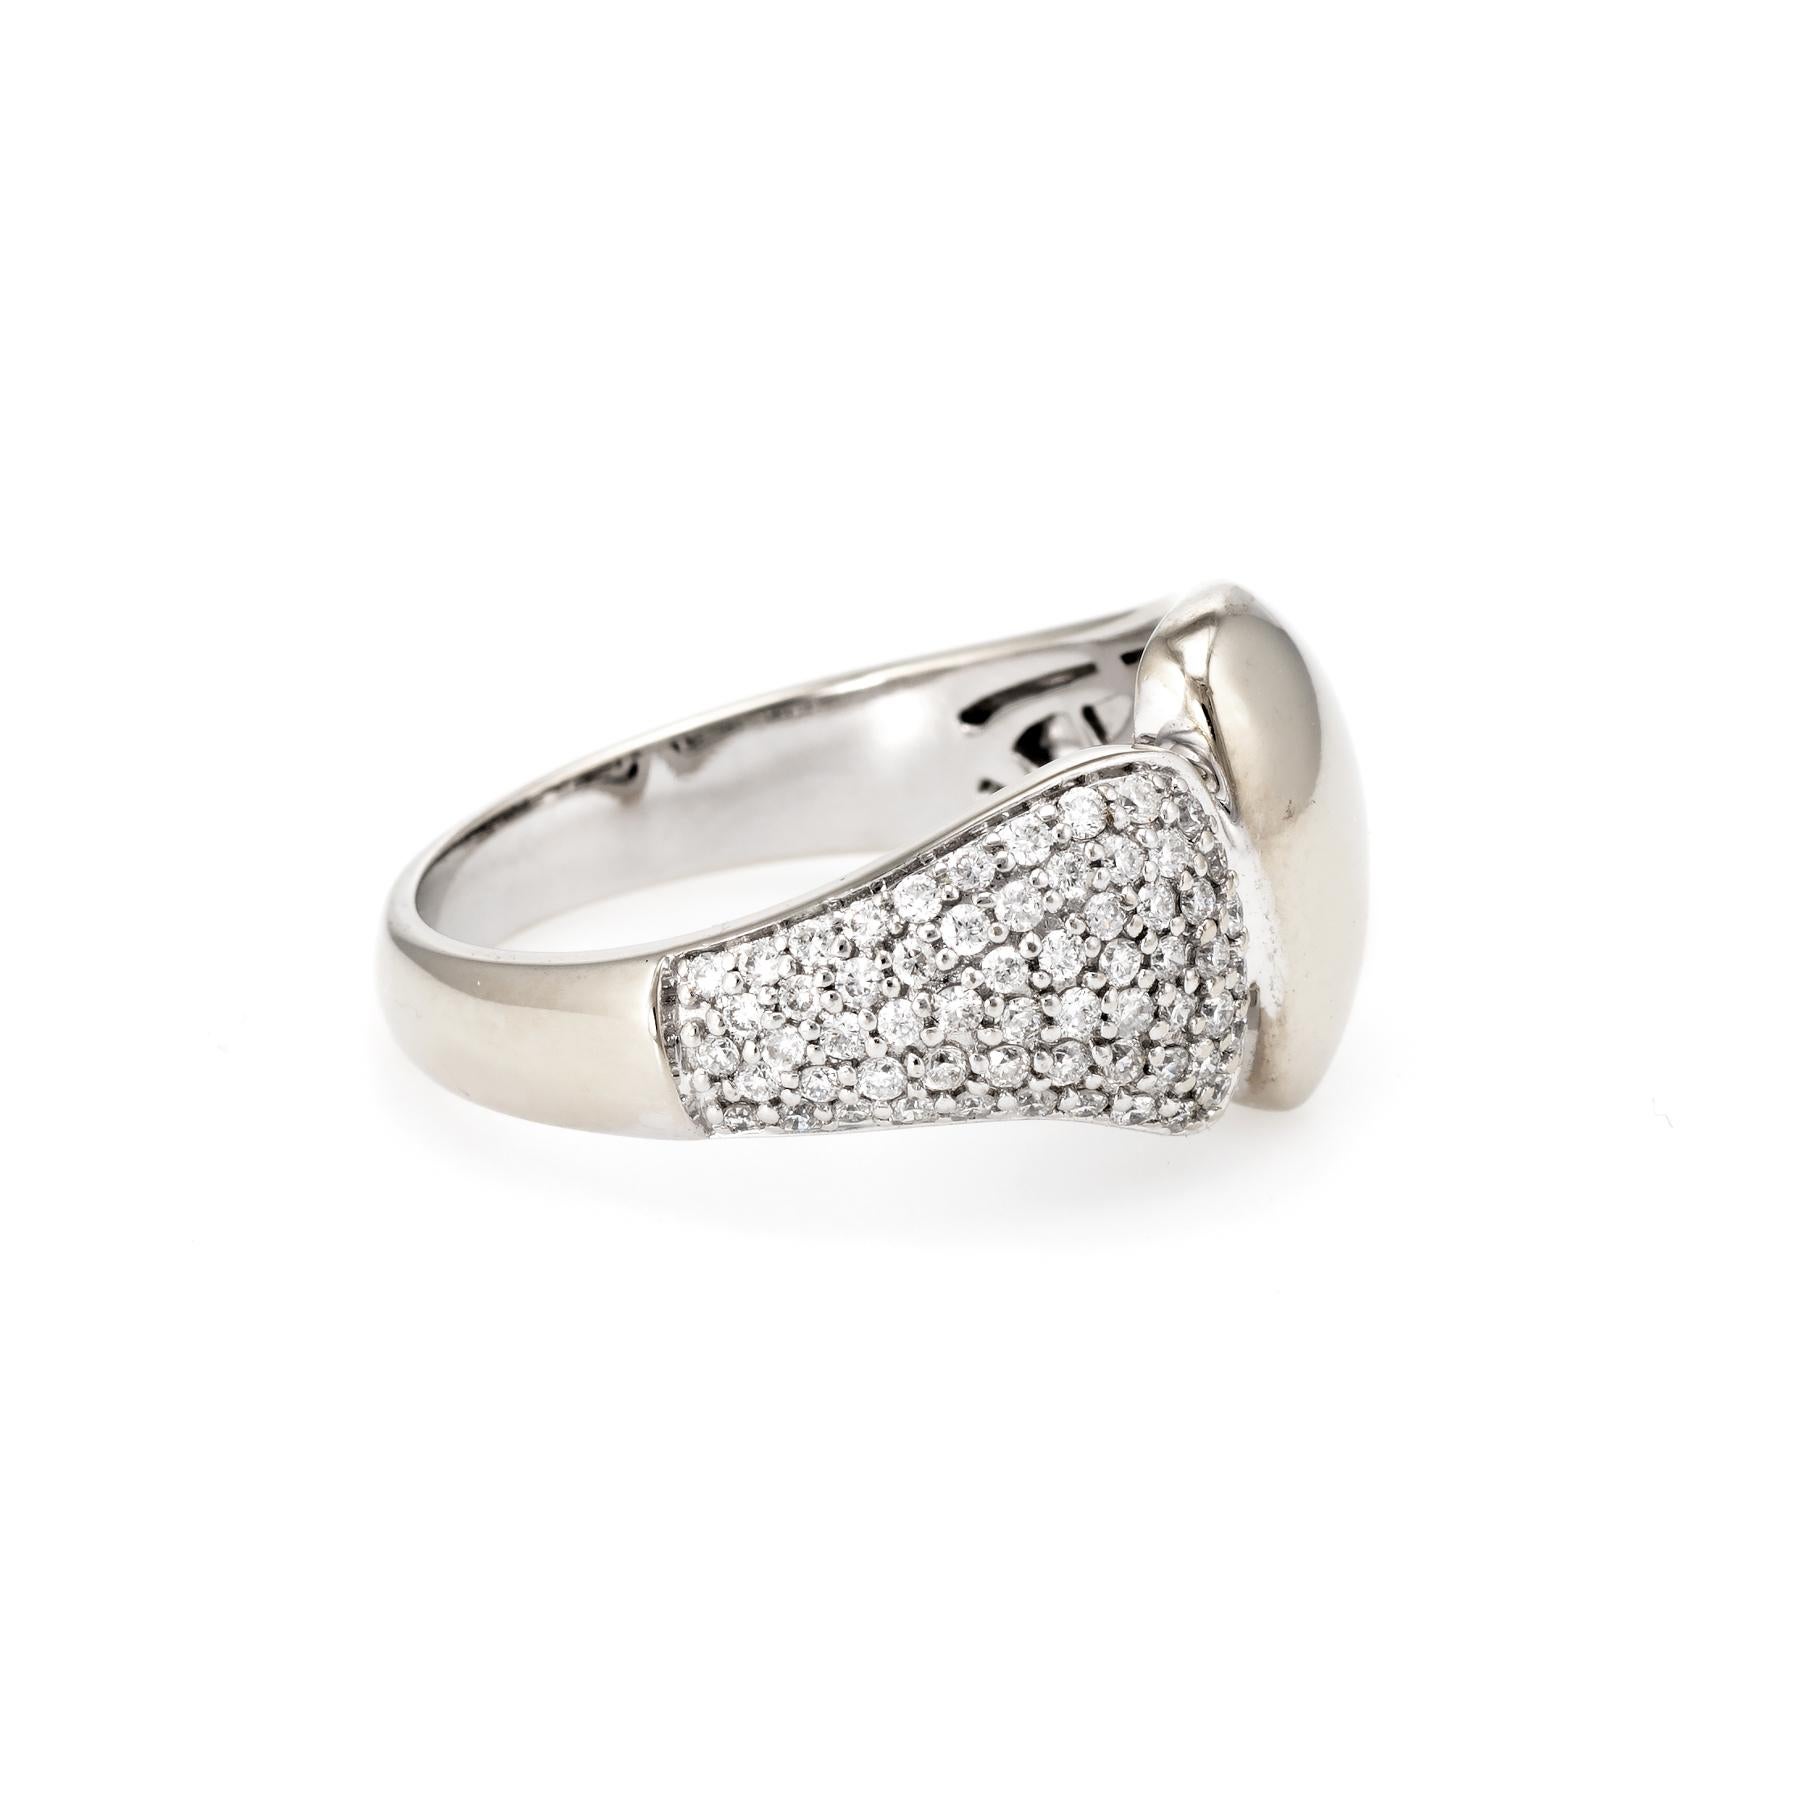 Modern Estate Pave Diamond Band 14 Karat White Gold Jewelry Alternative Wedding Ring